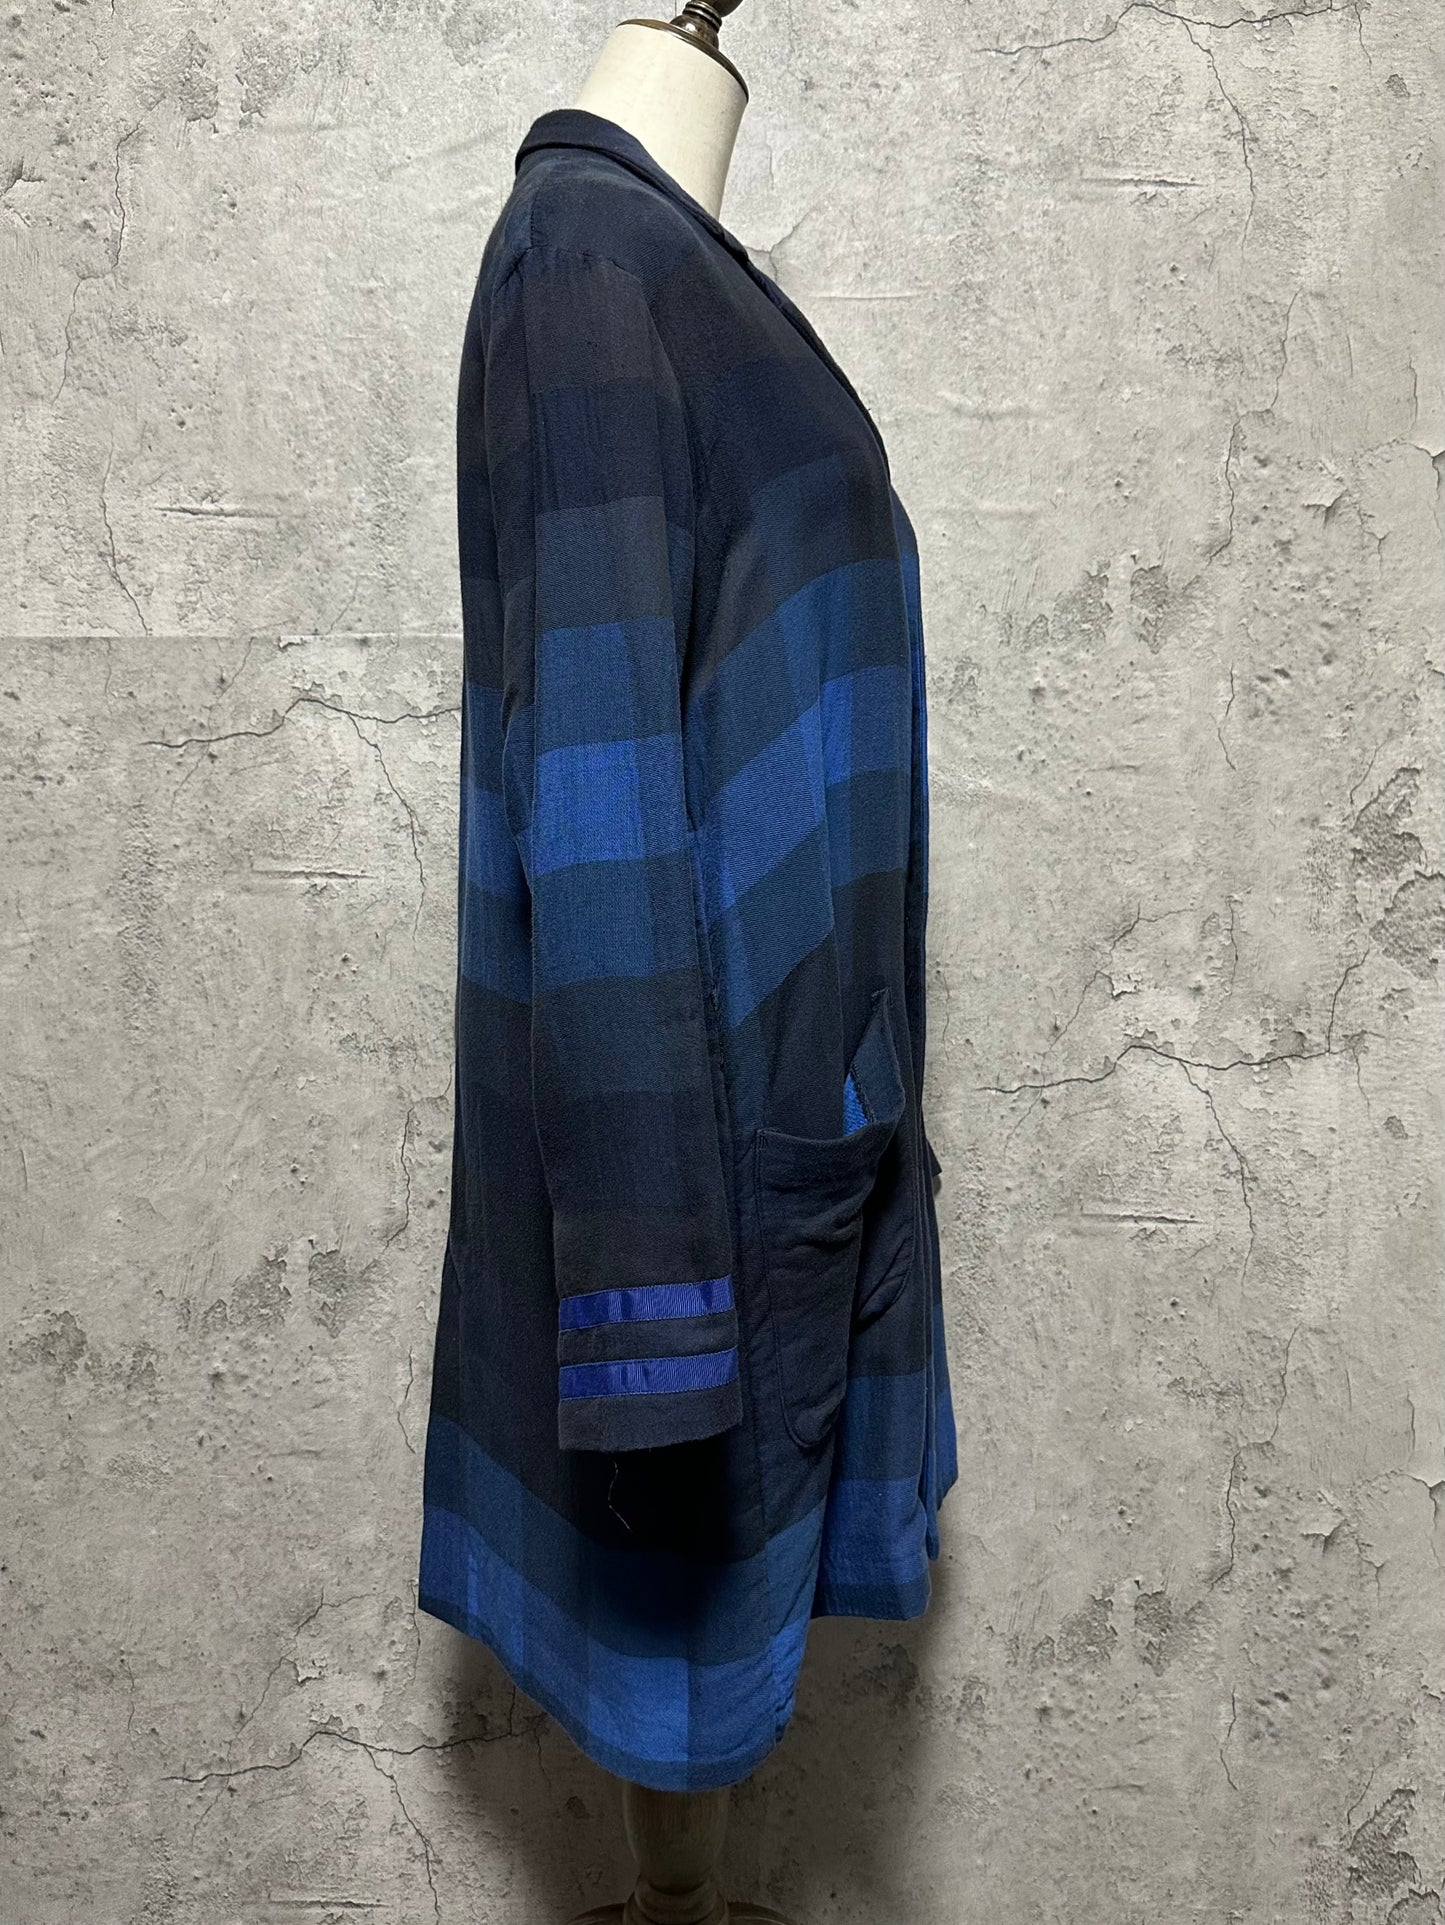 Acid Couture robe coat setup